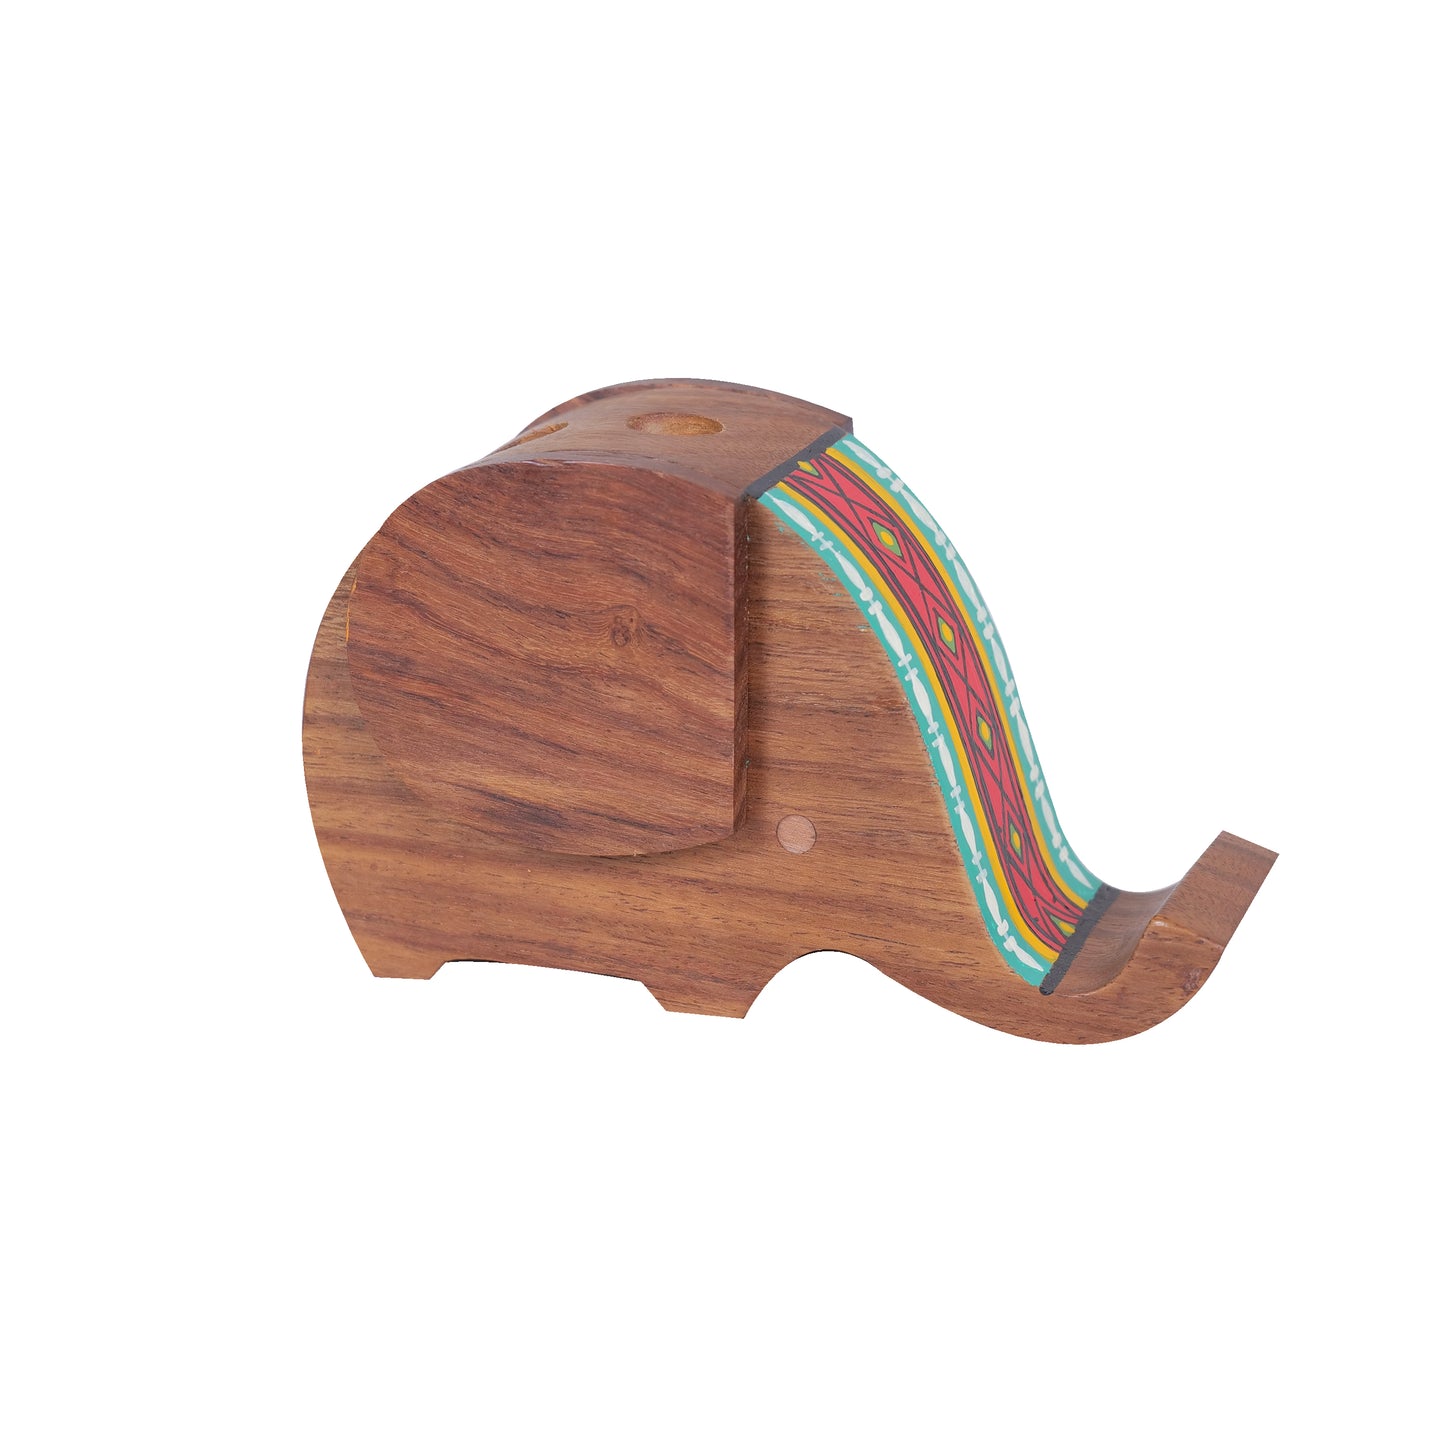 Wooden Handpainted Elephant Design Pen Cum Mobile Stand